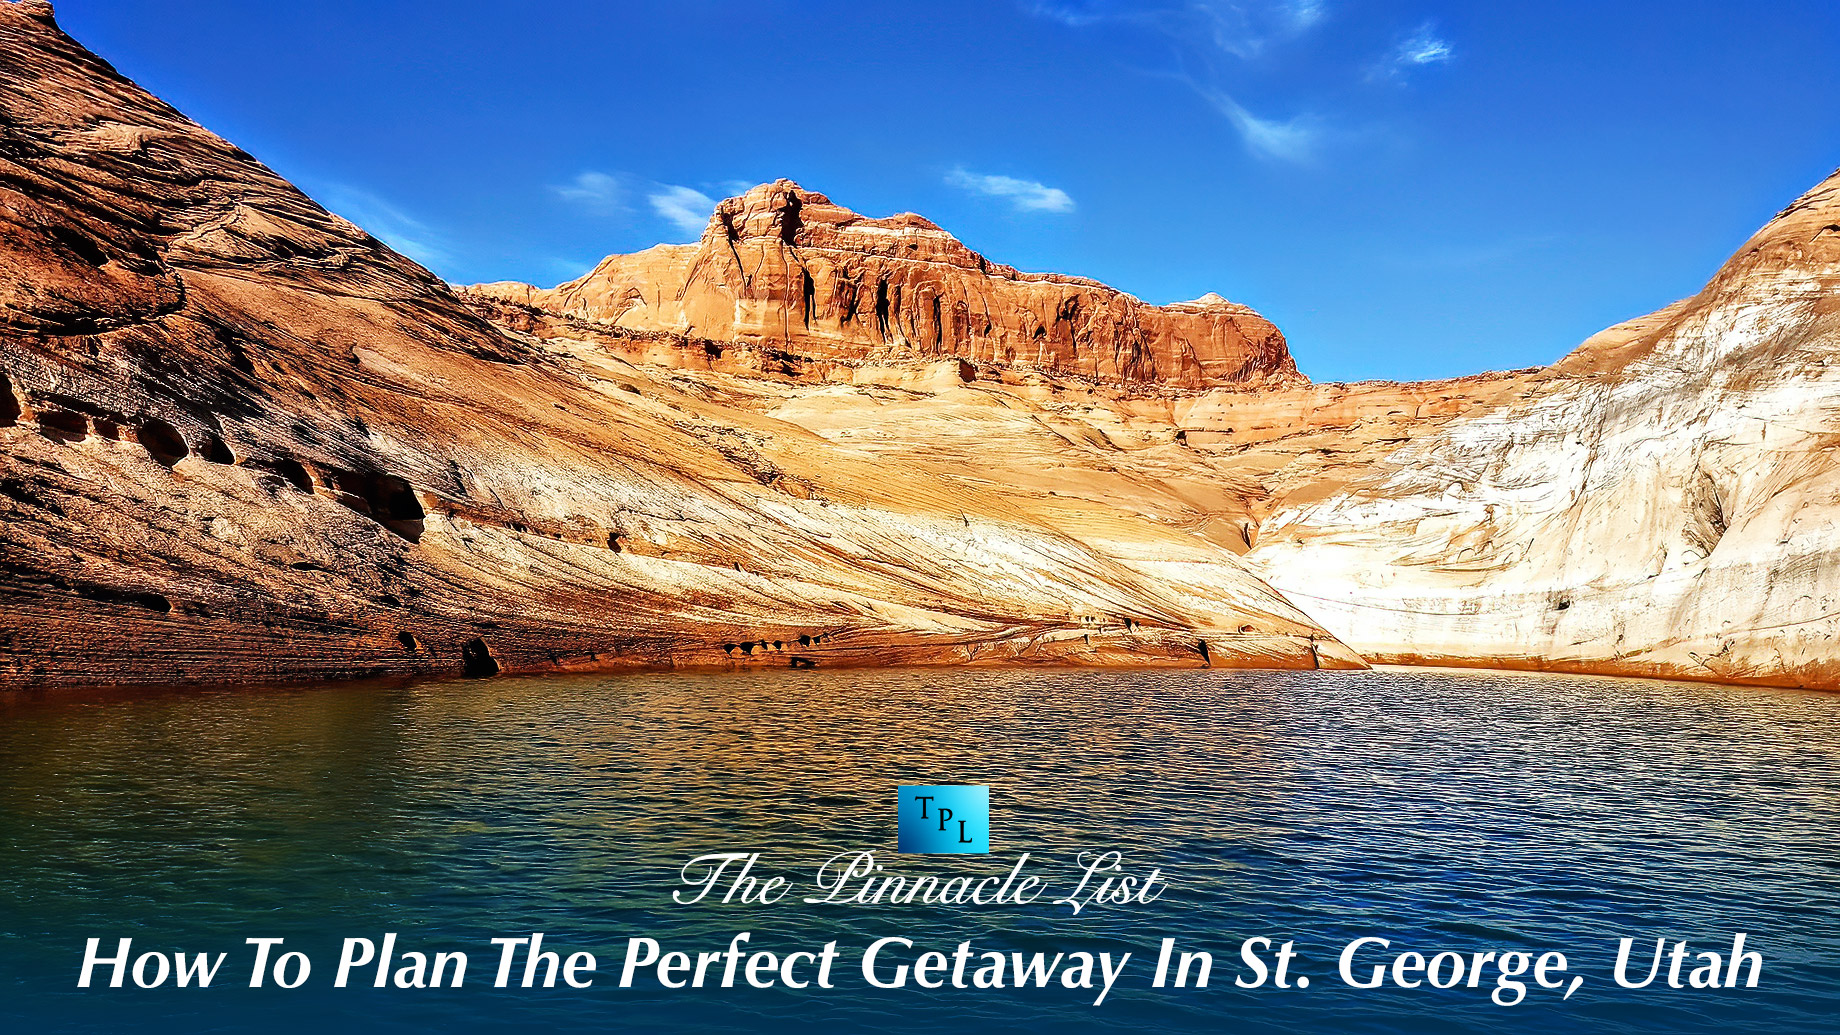 How To Plan The Perfect Getaway In St. George, Utah